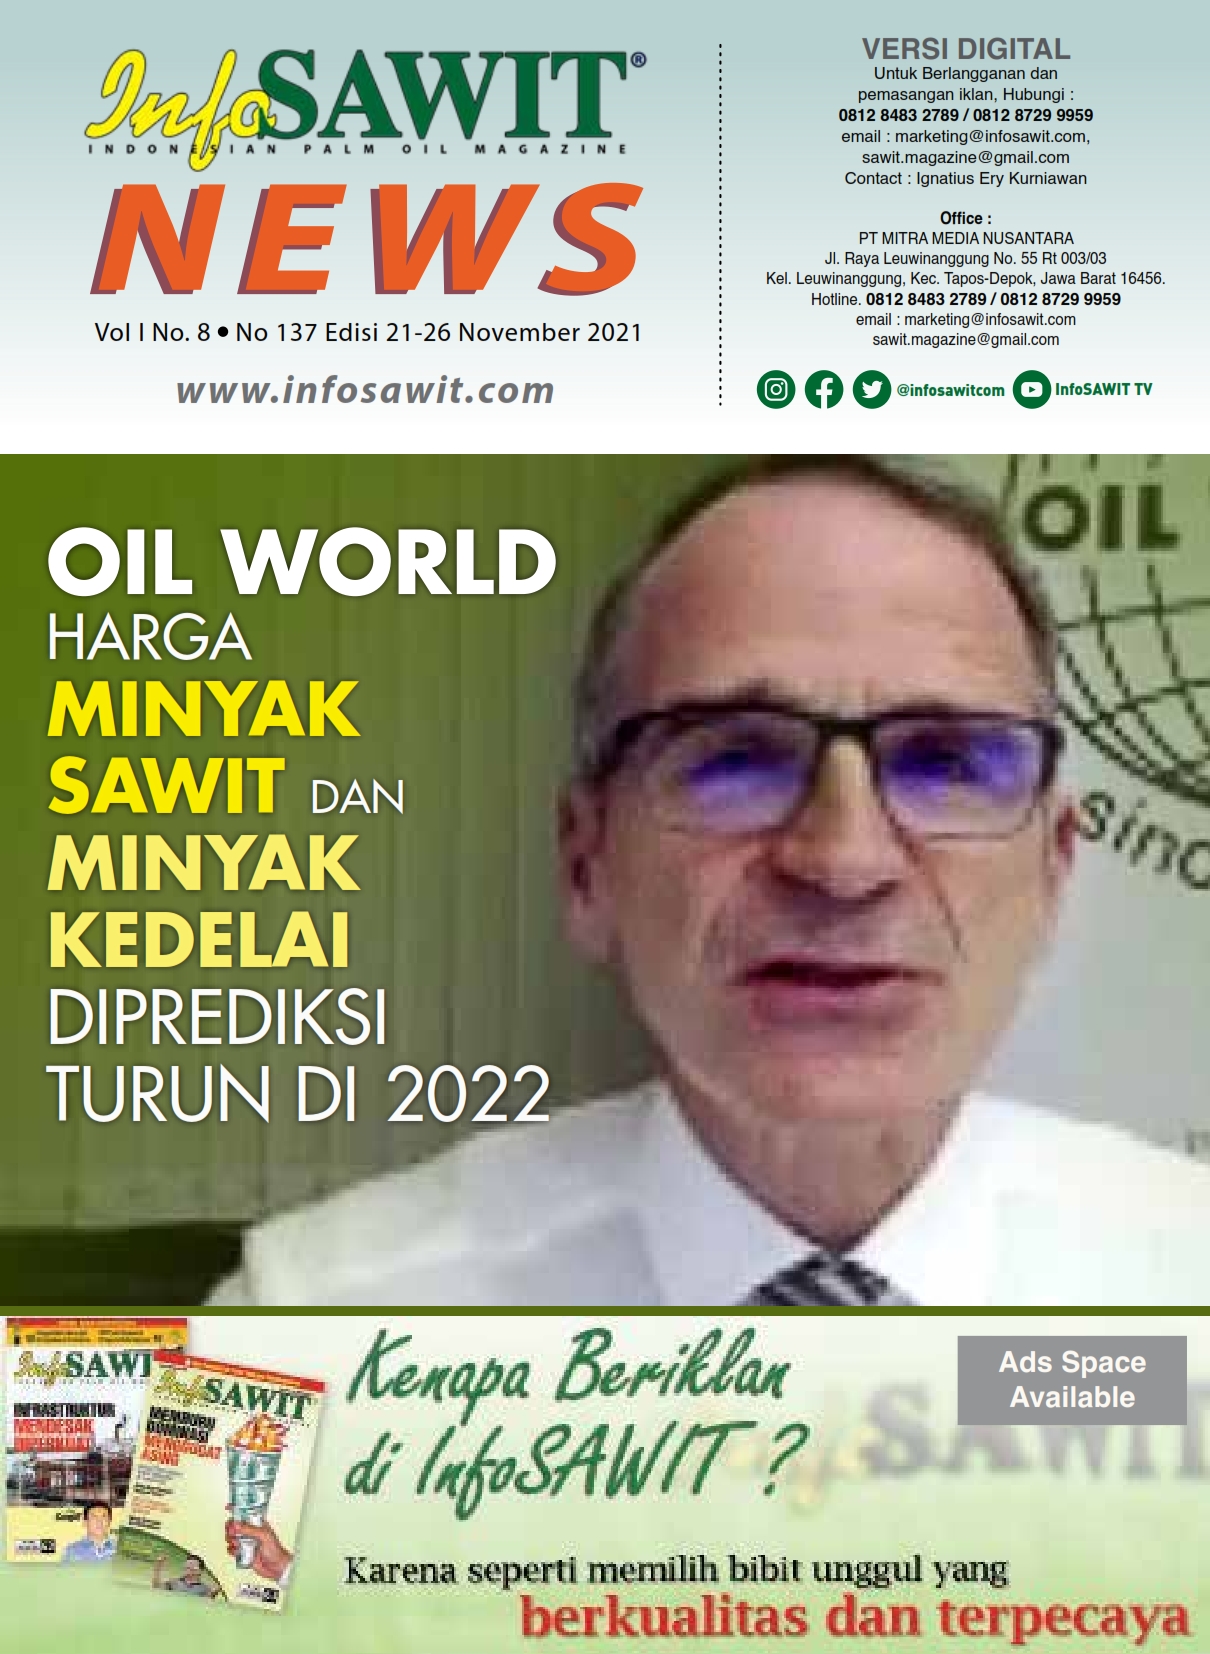 InfoSAWIT NEWS Vol 8 No 137 Edisi 21-26 November 2021